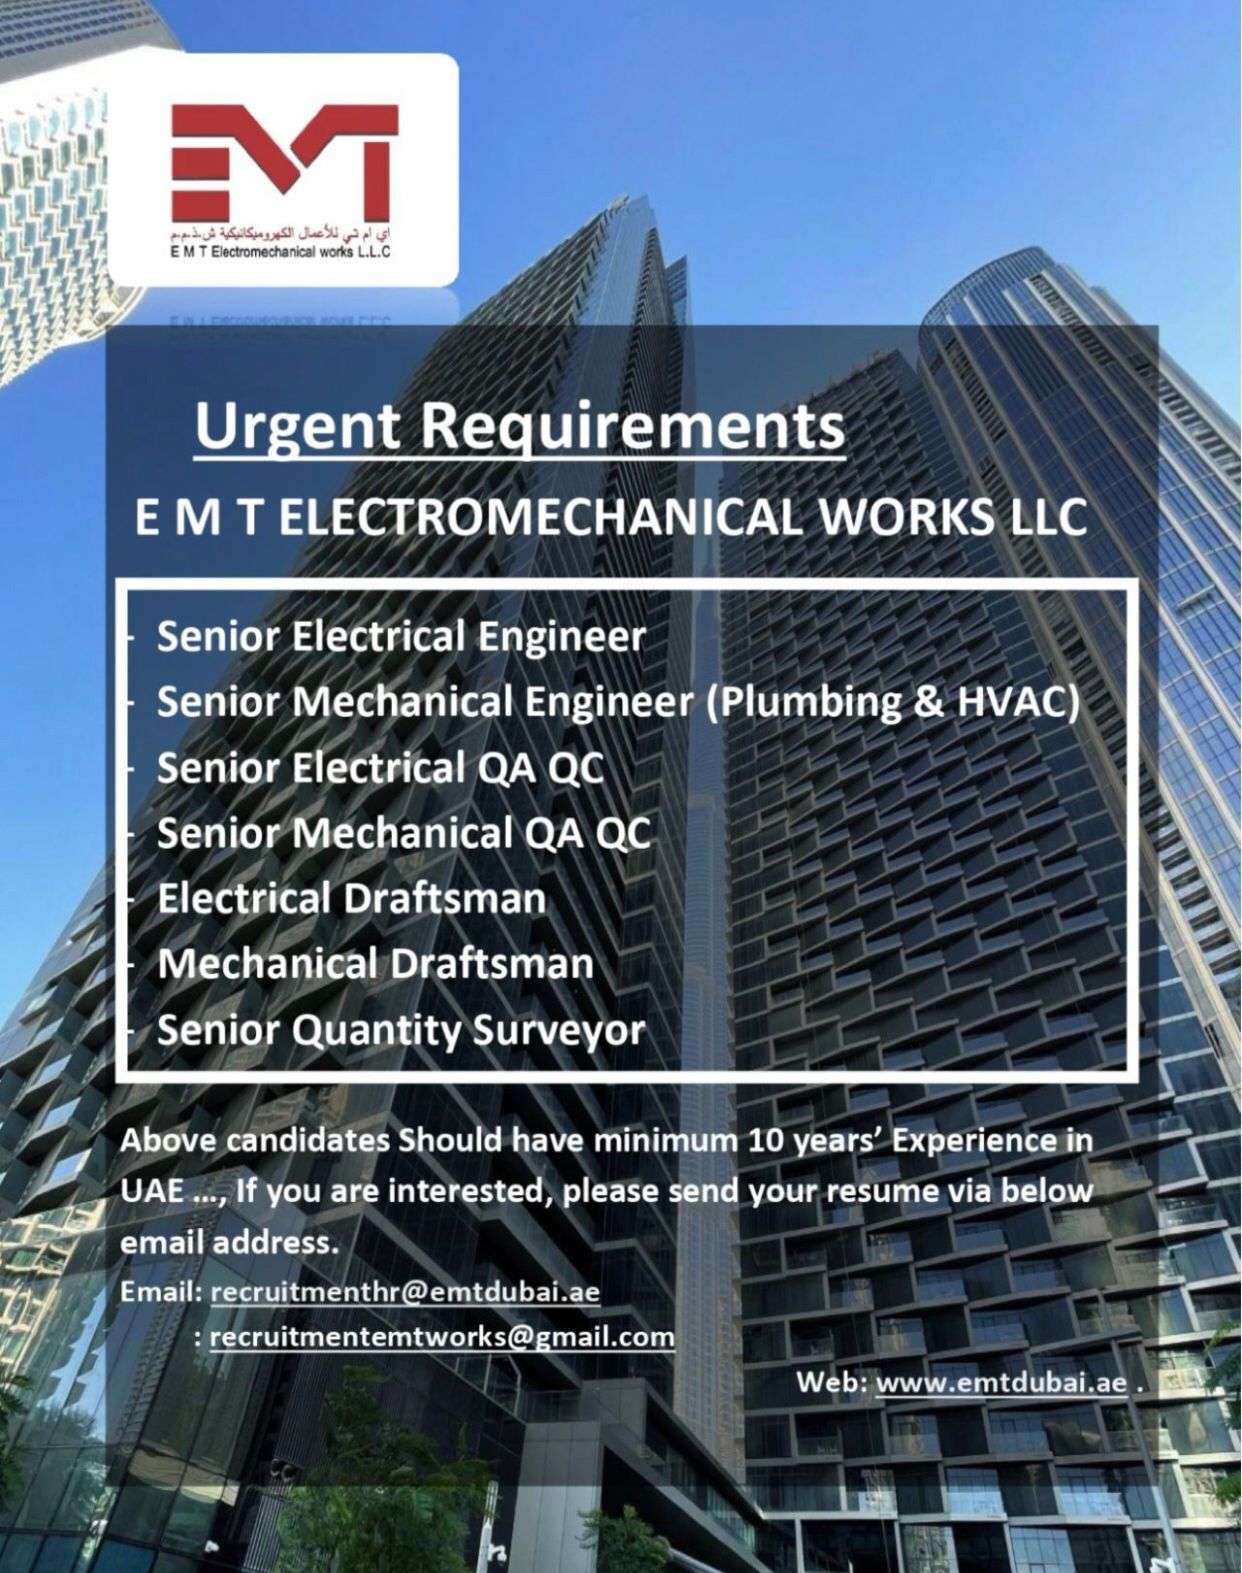 Vacancy - Multiple EMT Electromechanical Works LLC Job Vacancies